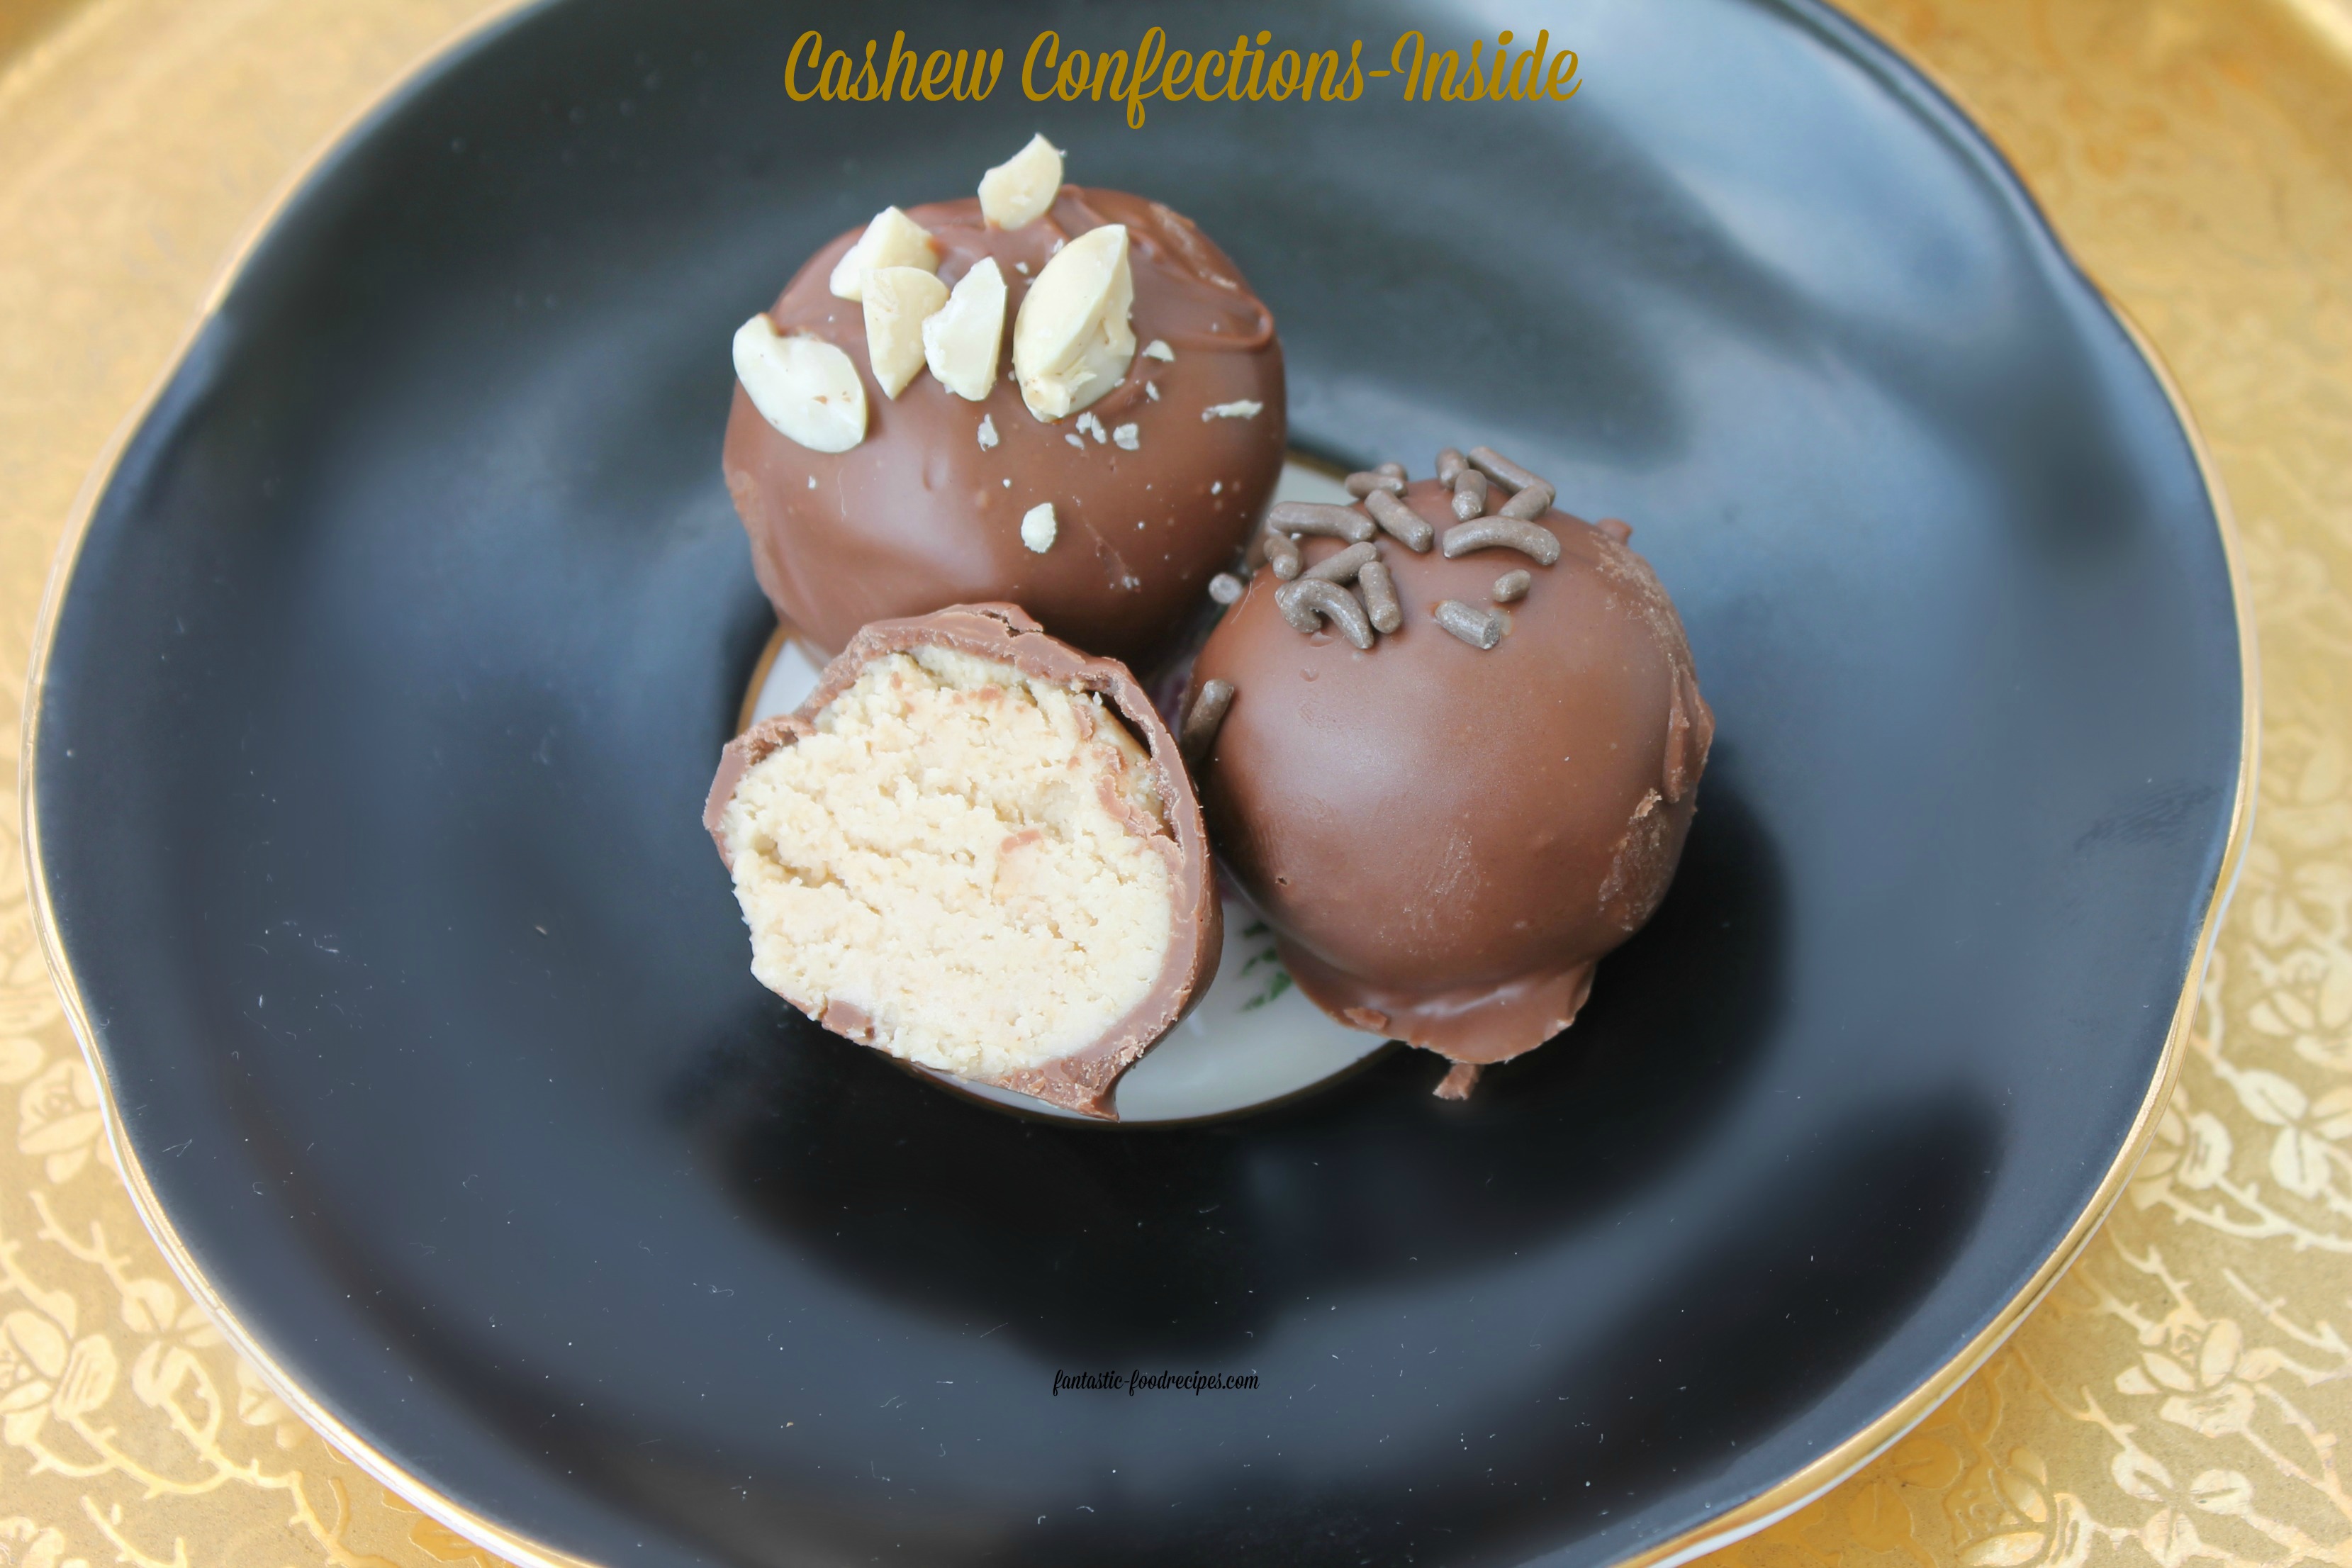 Cashew Confections close insides